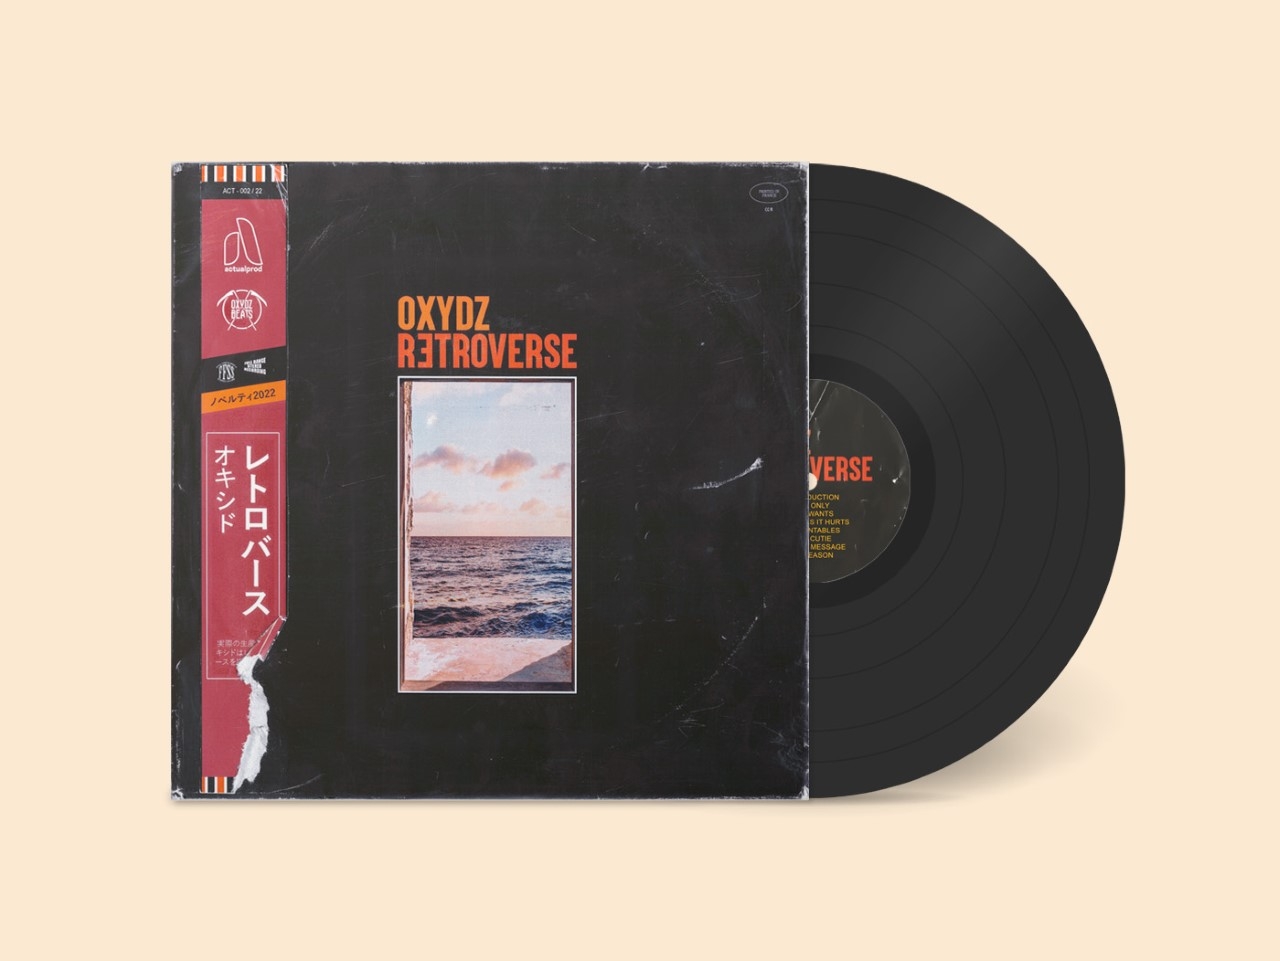 Album vinyle Oxydz - Retroverse de oxydz sur Scredboutique.com